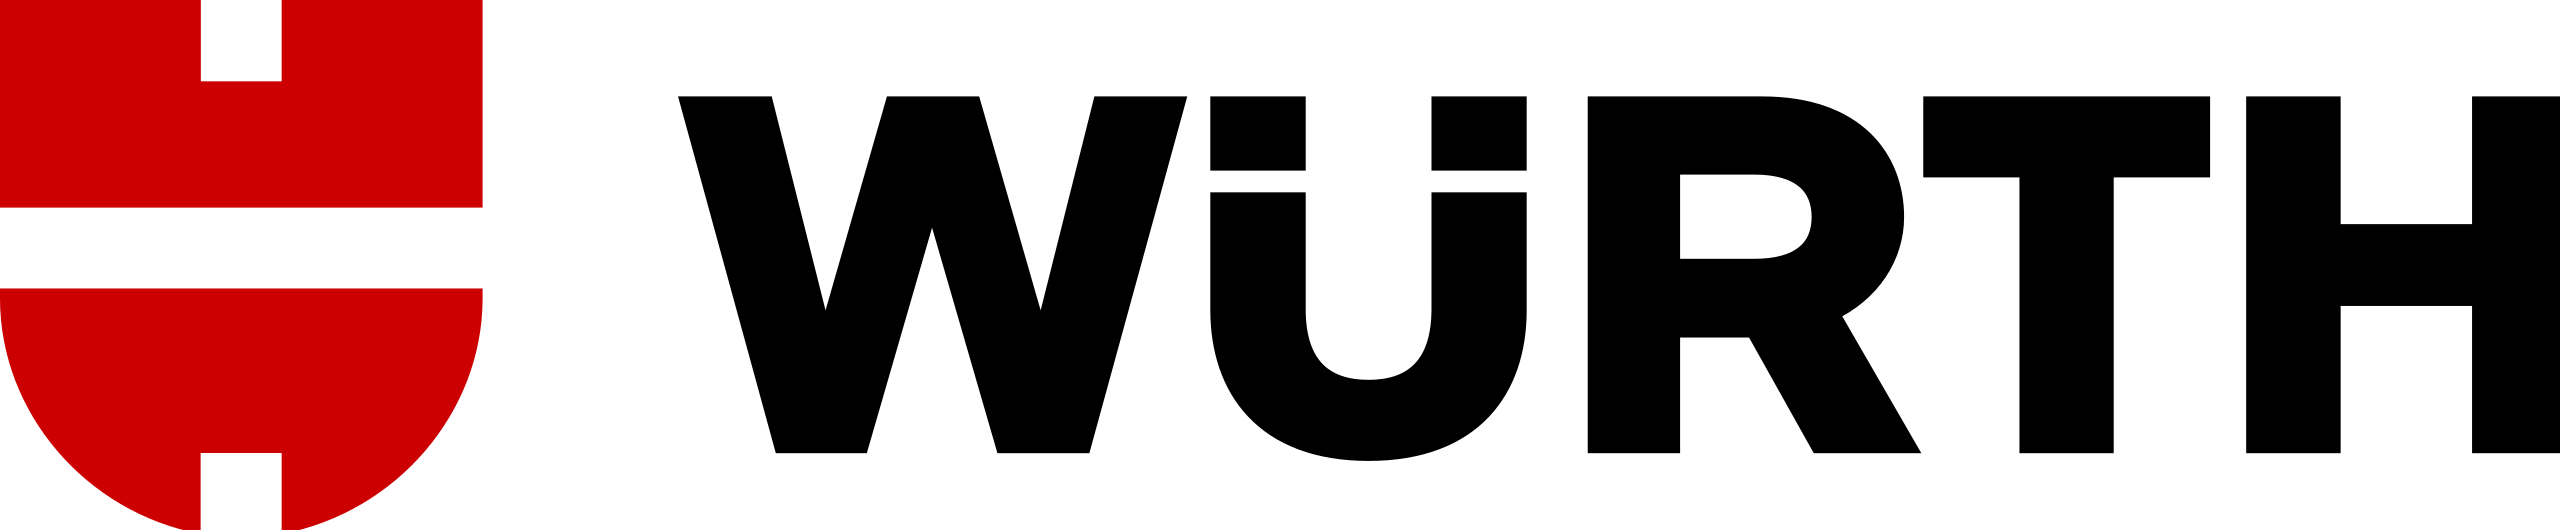 Wuerth_Logo_2010.svg.png